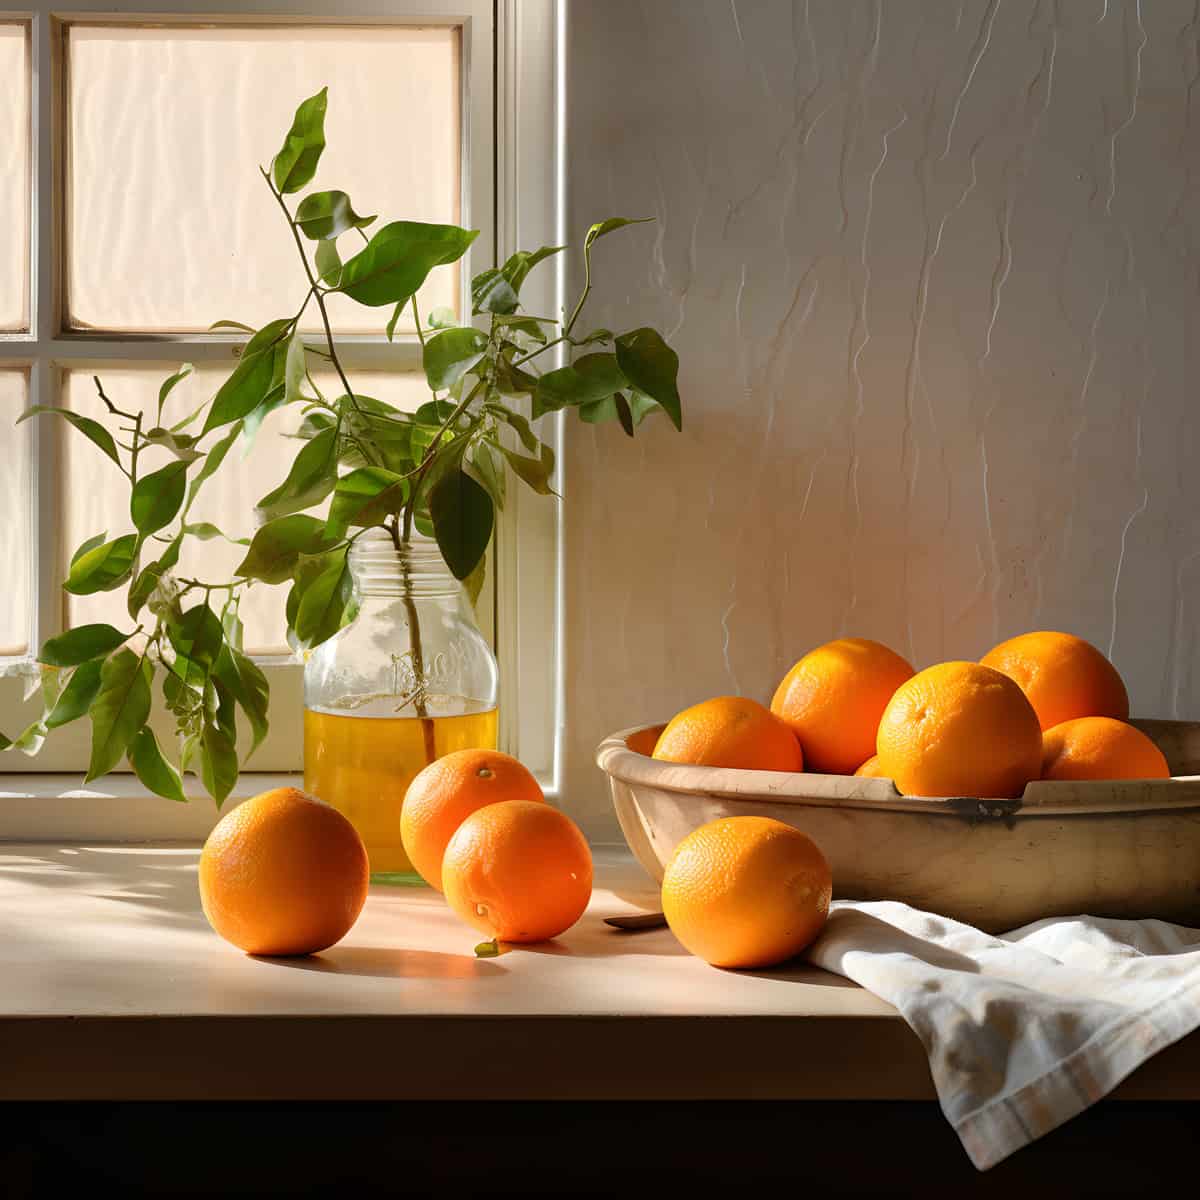 Taiwan Tangerine on a kitchen counter